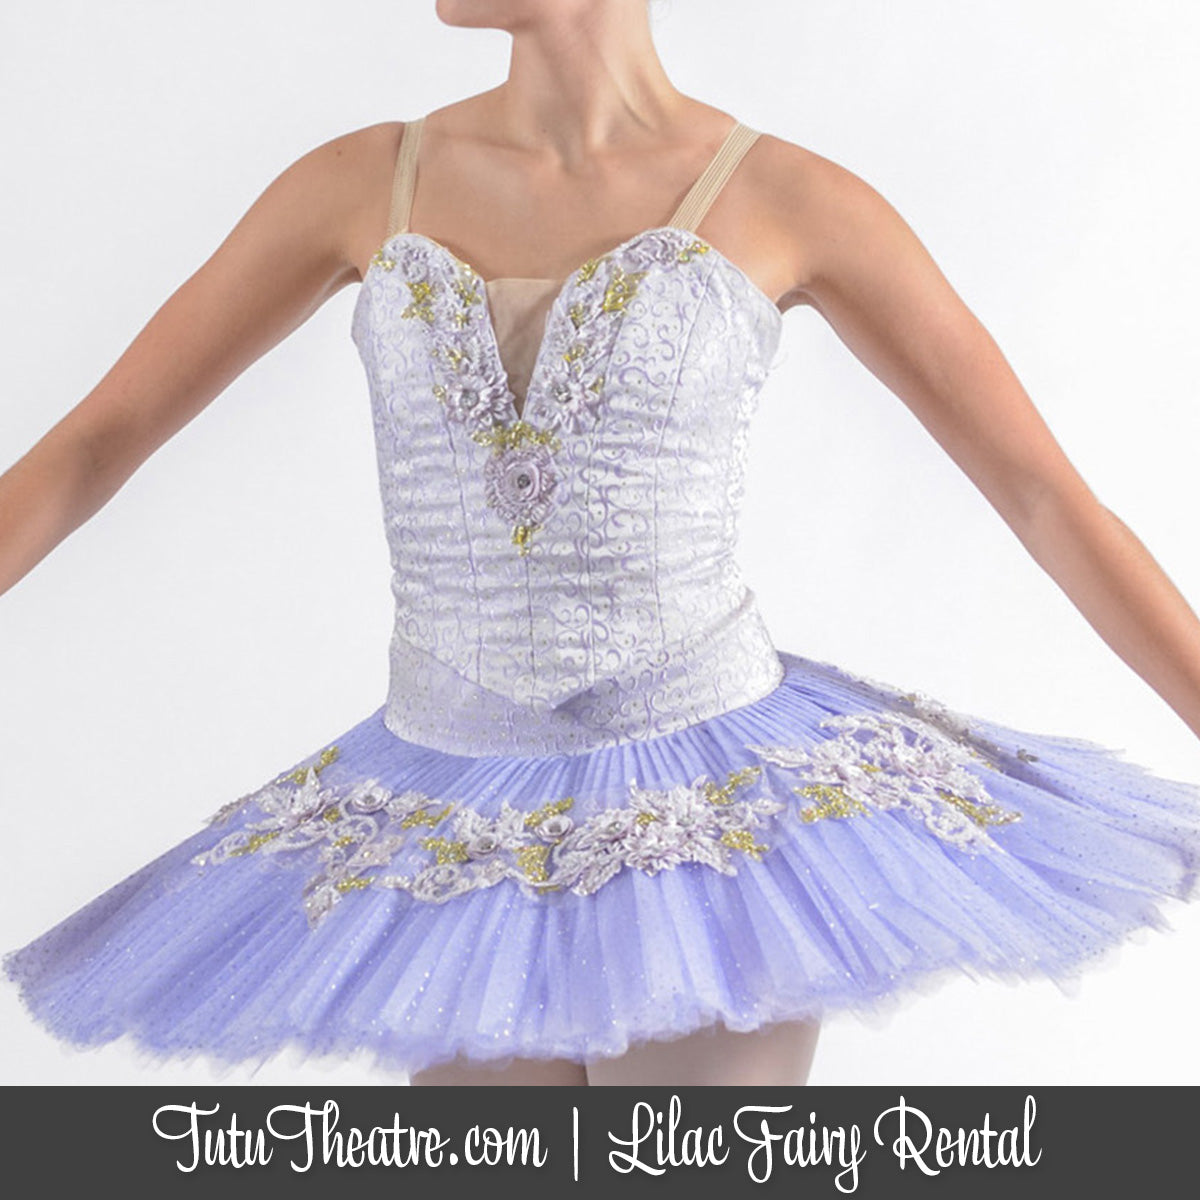 Lilac Fairy Classical Tutu Rental